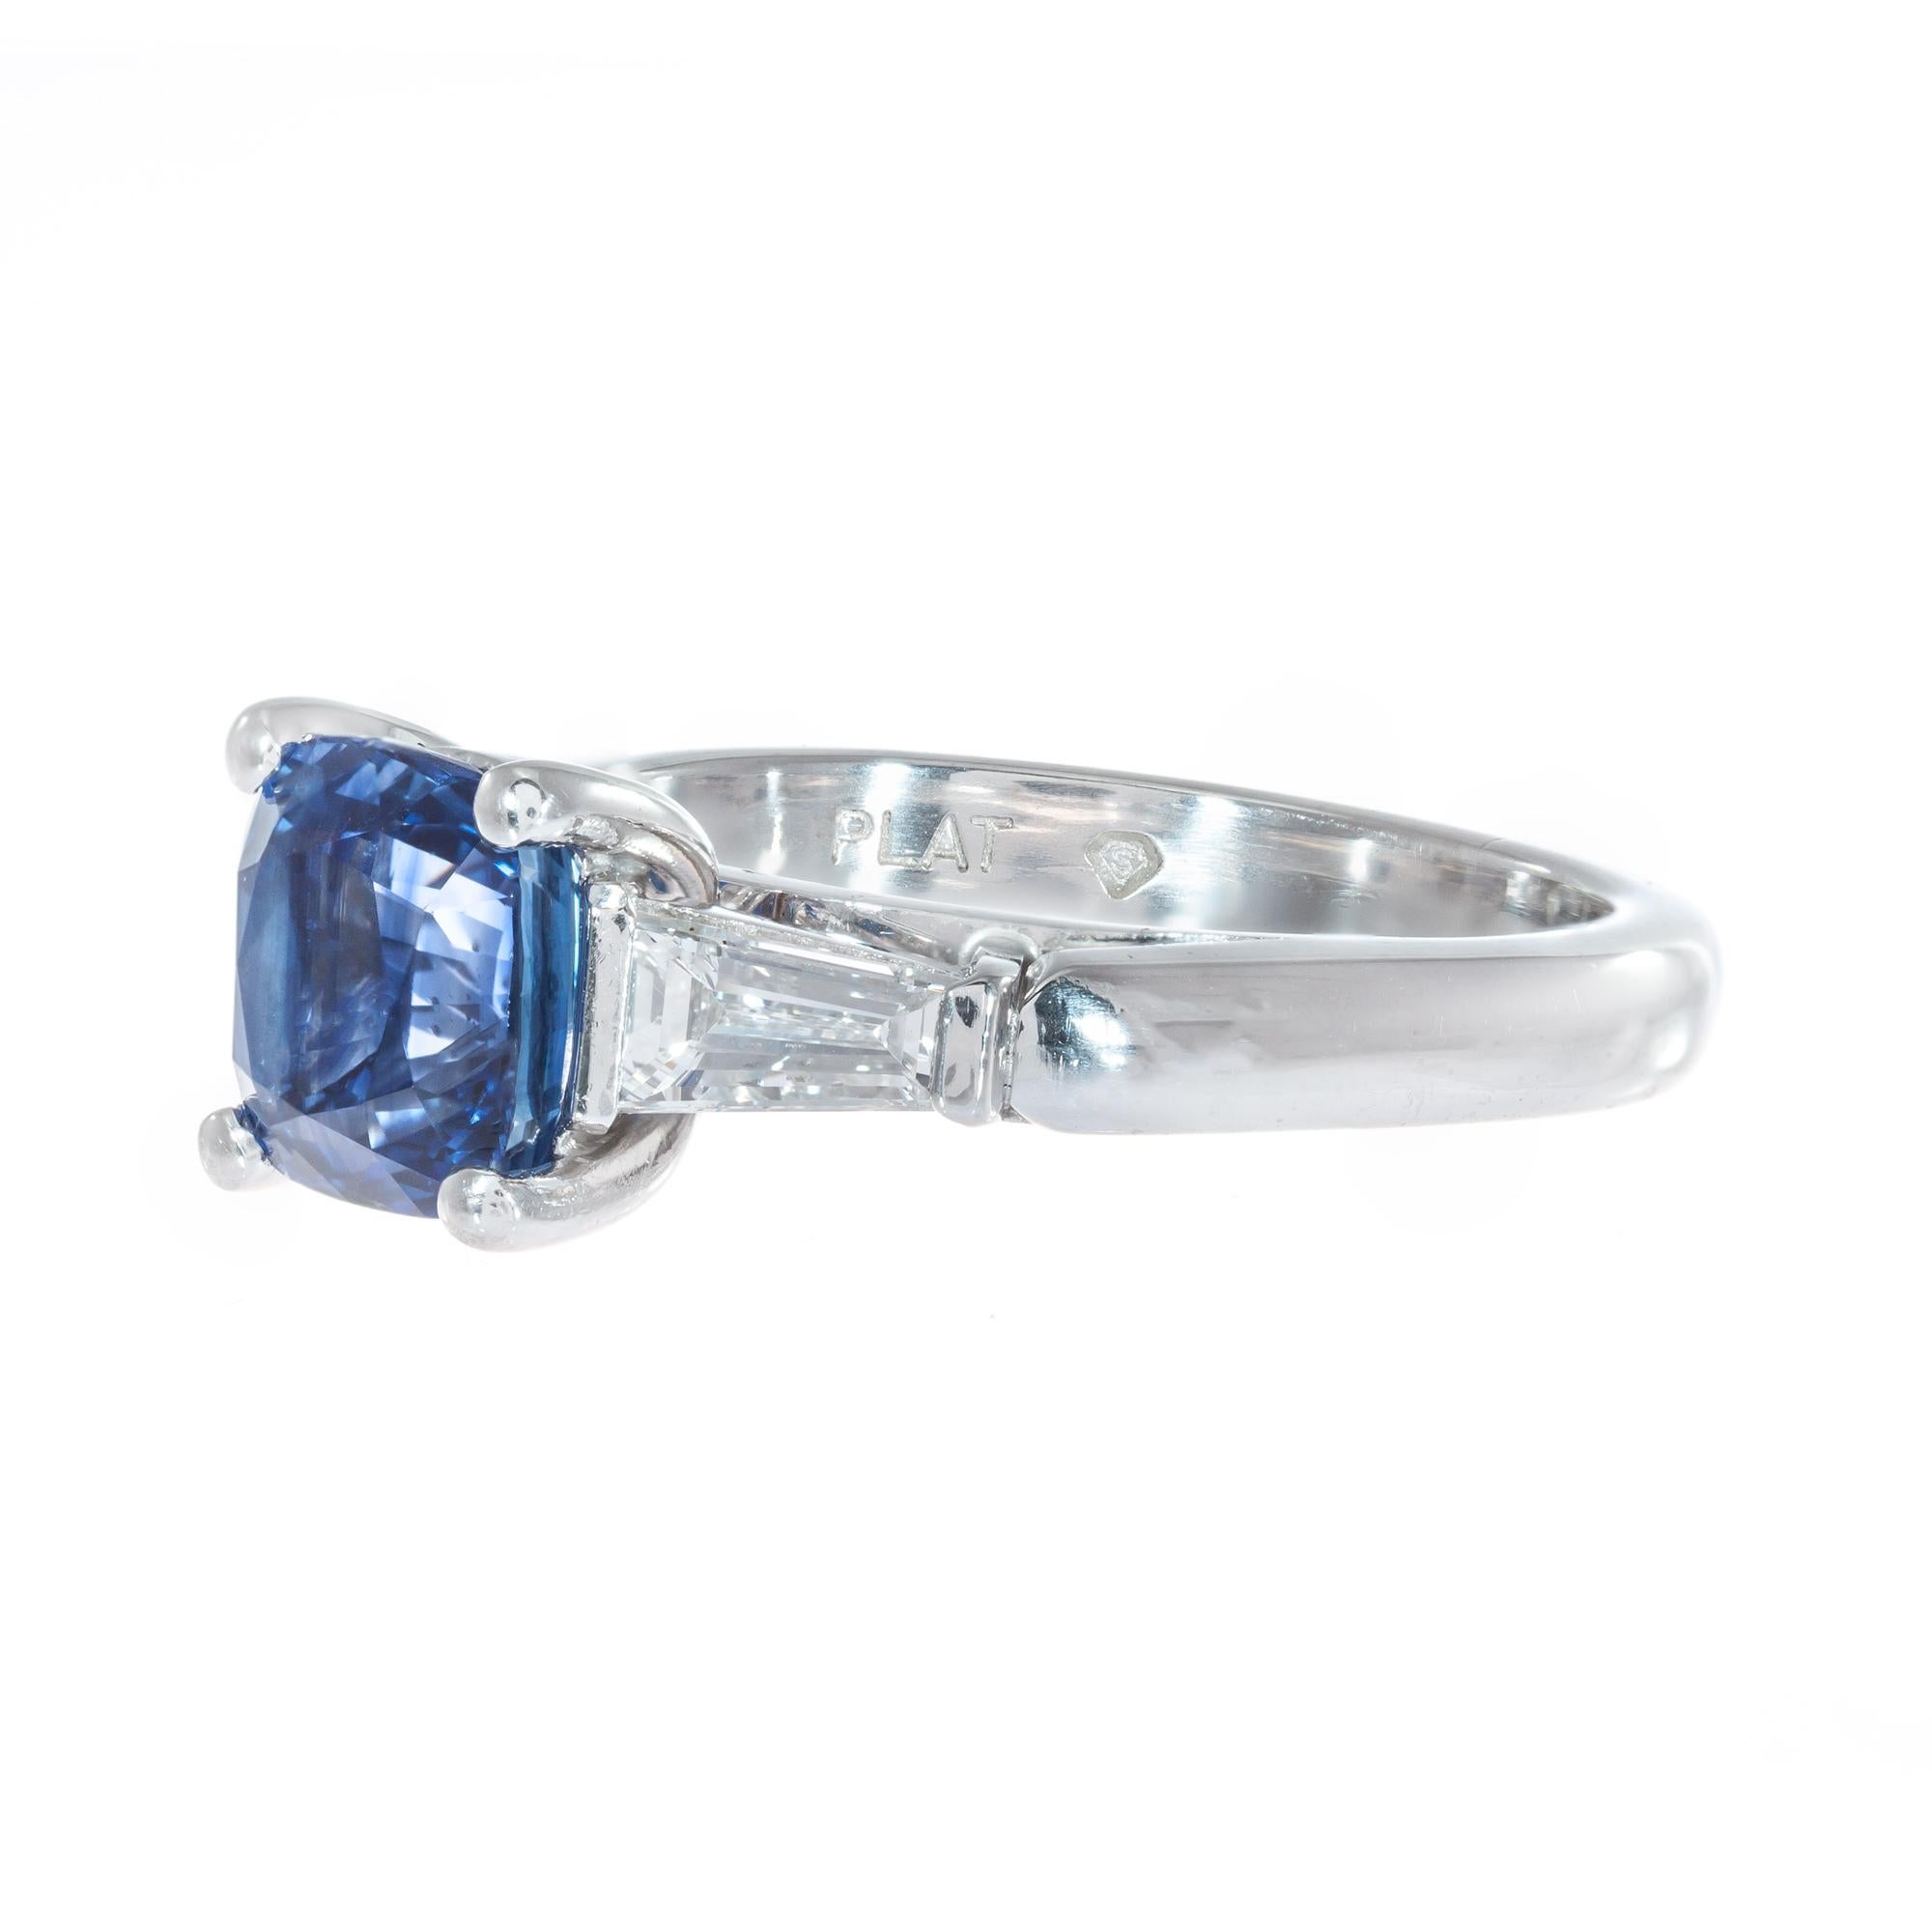 Cushion Cut Peter Suchy GIA Certified 2.17 Carat Sapphire Diamond Platinum Engagement Ring